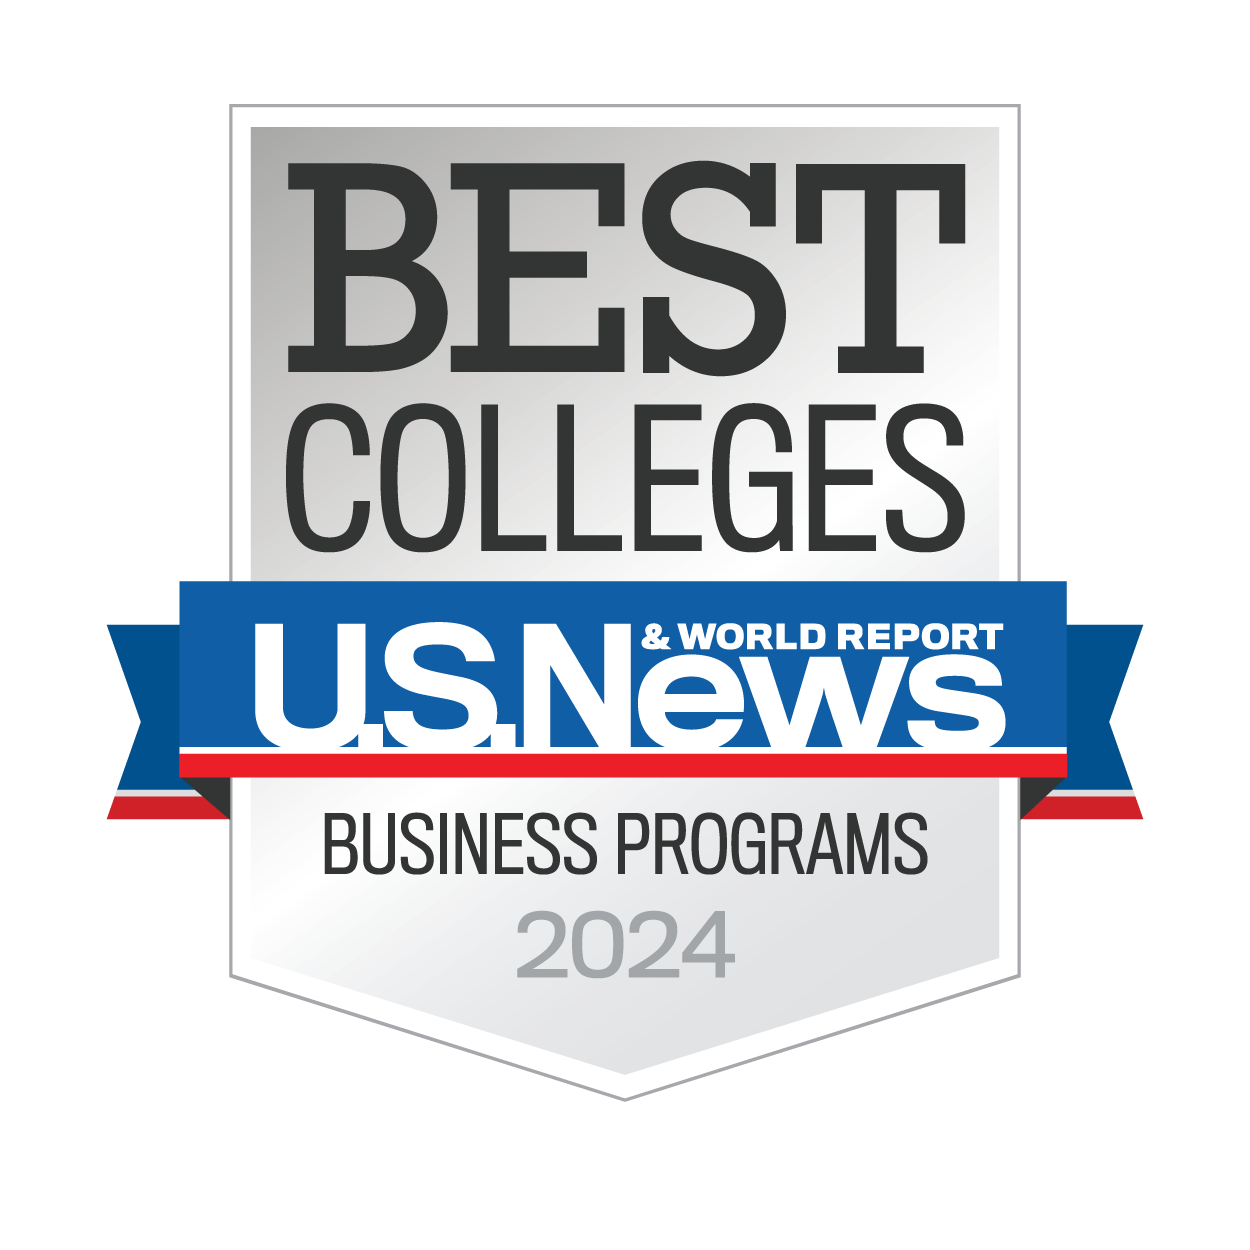 Best Colleges - Business Program